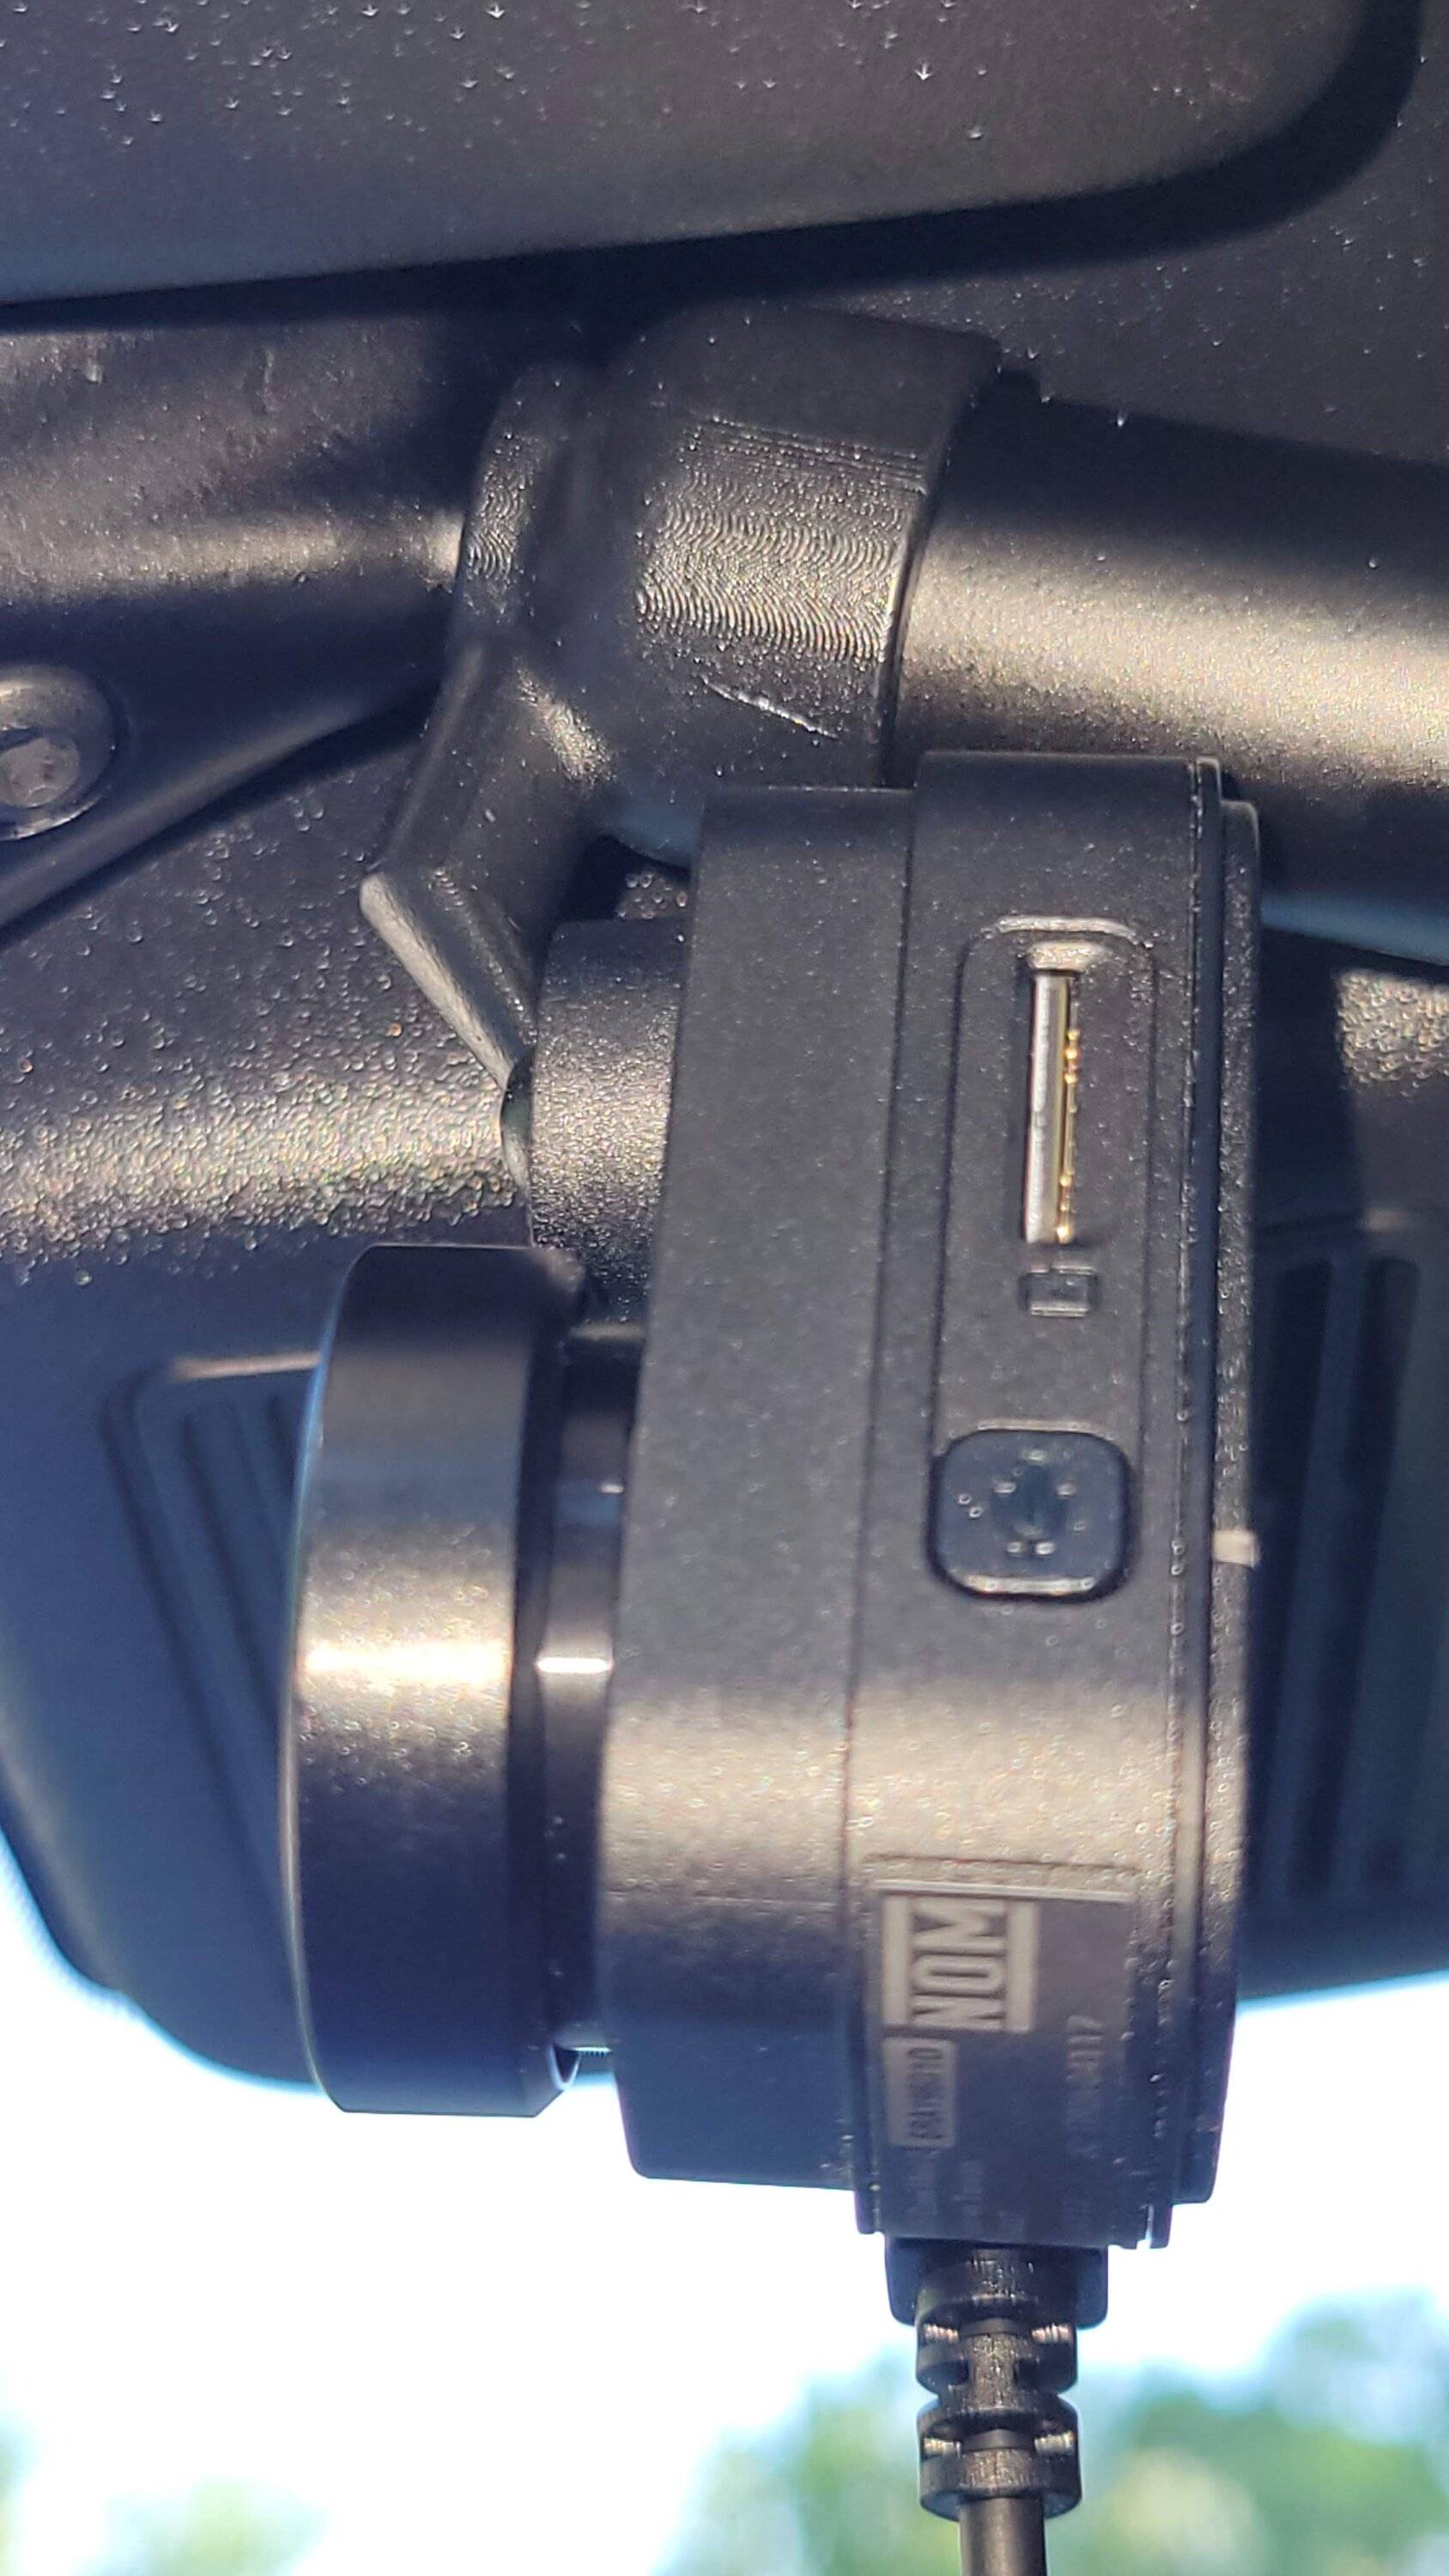 Garmin Dashcam mini 2 multiple camera setup